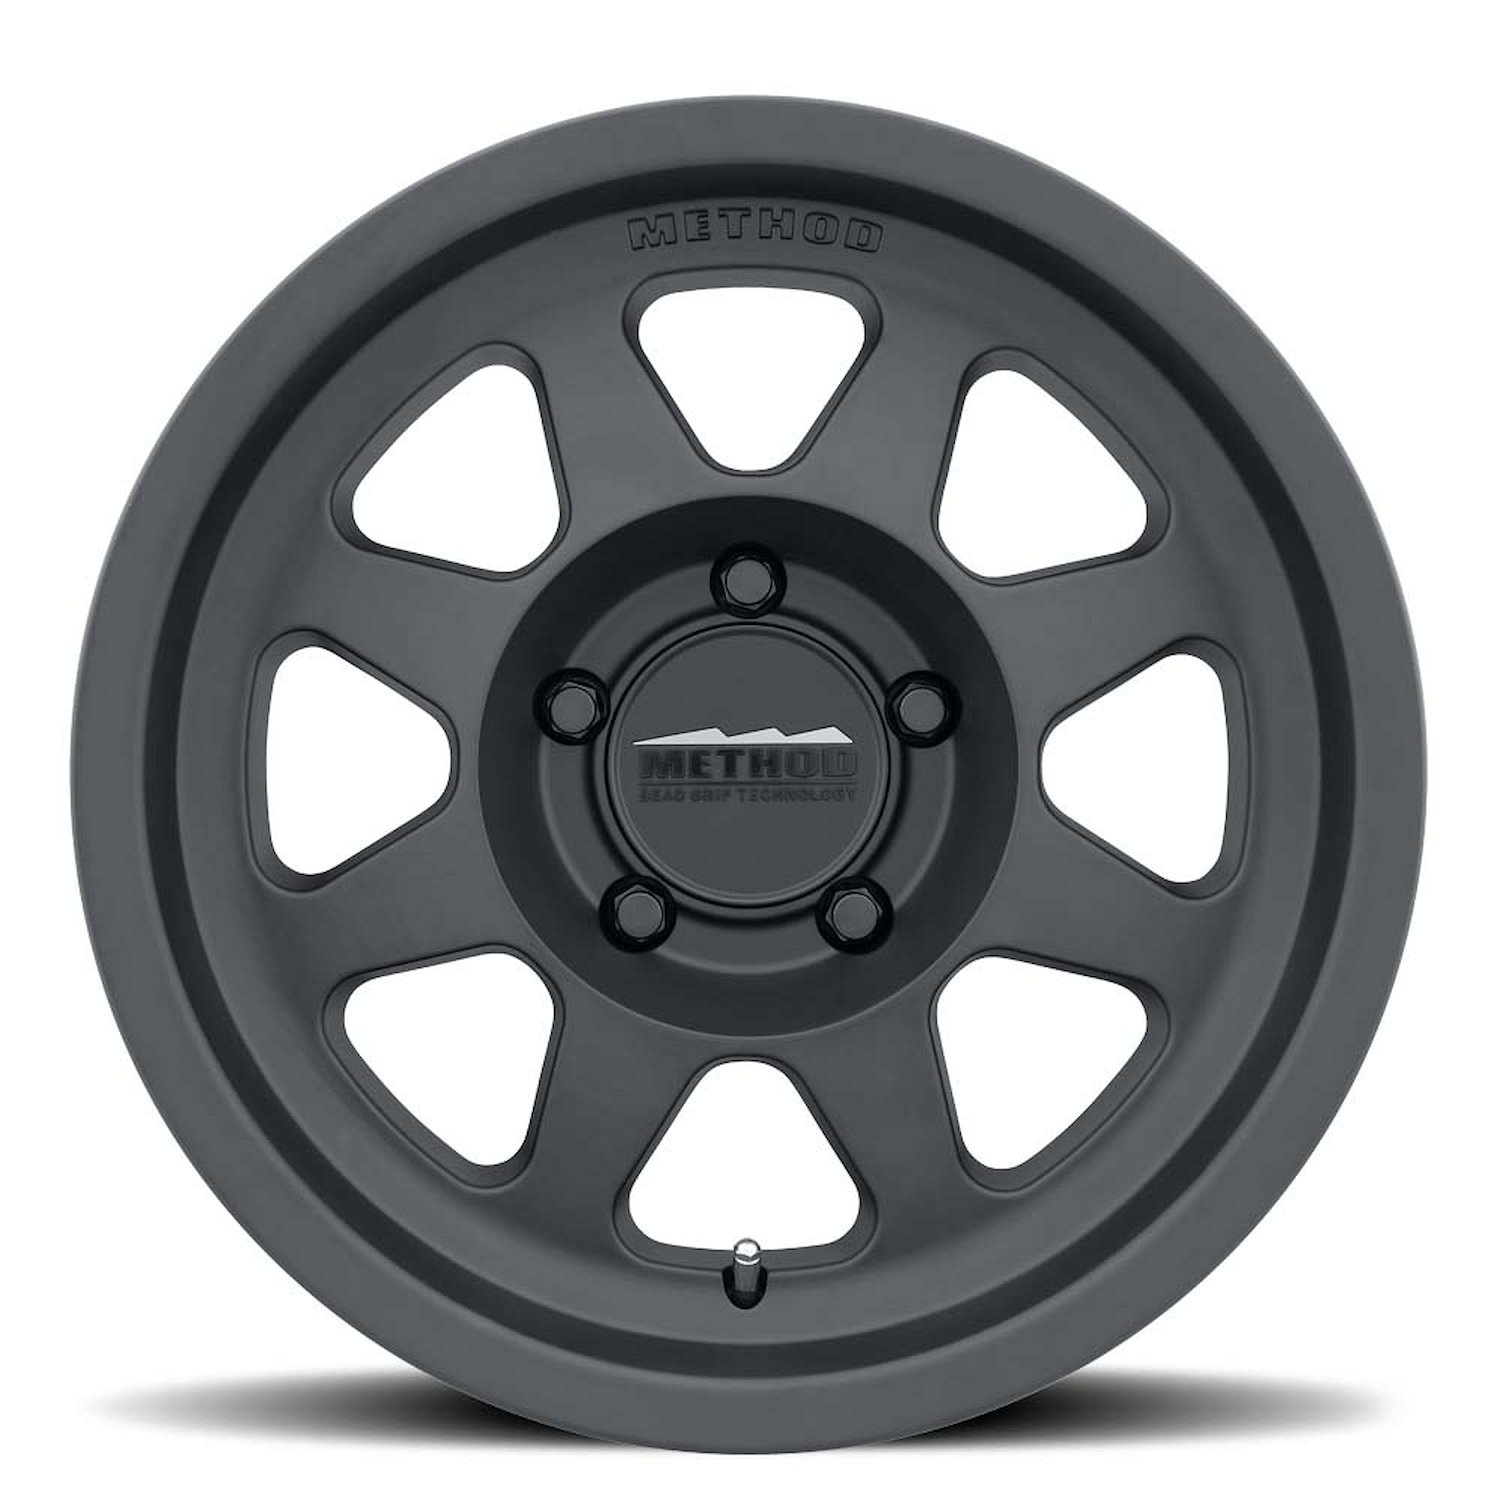 MR70168052500 TRAIL MR701 Bead Grip Wheel [Size: 16" x 8"] Matte Black